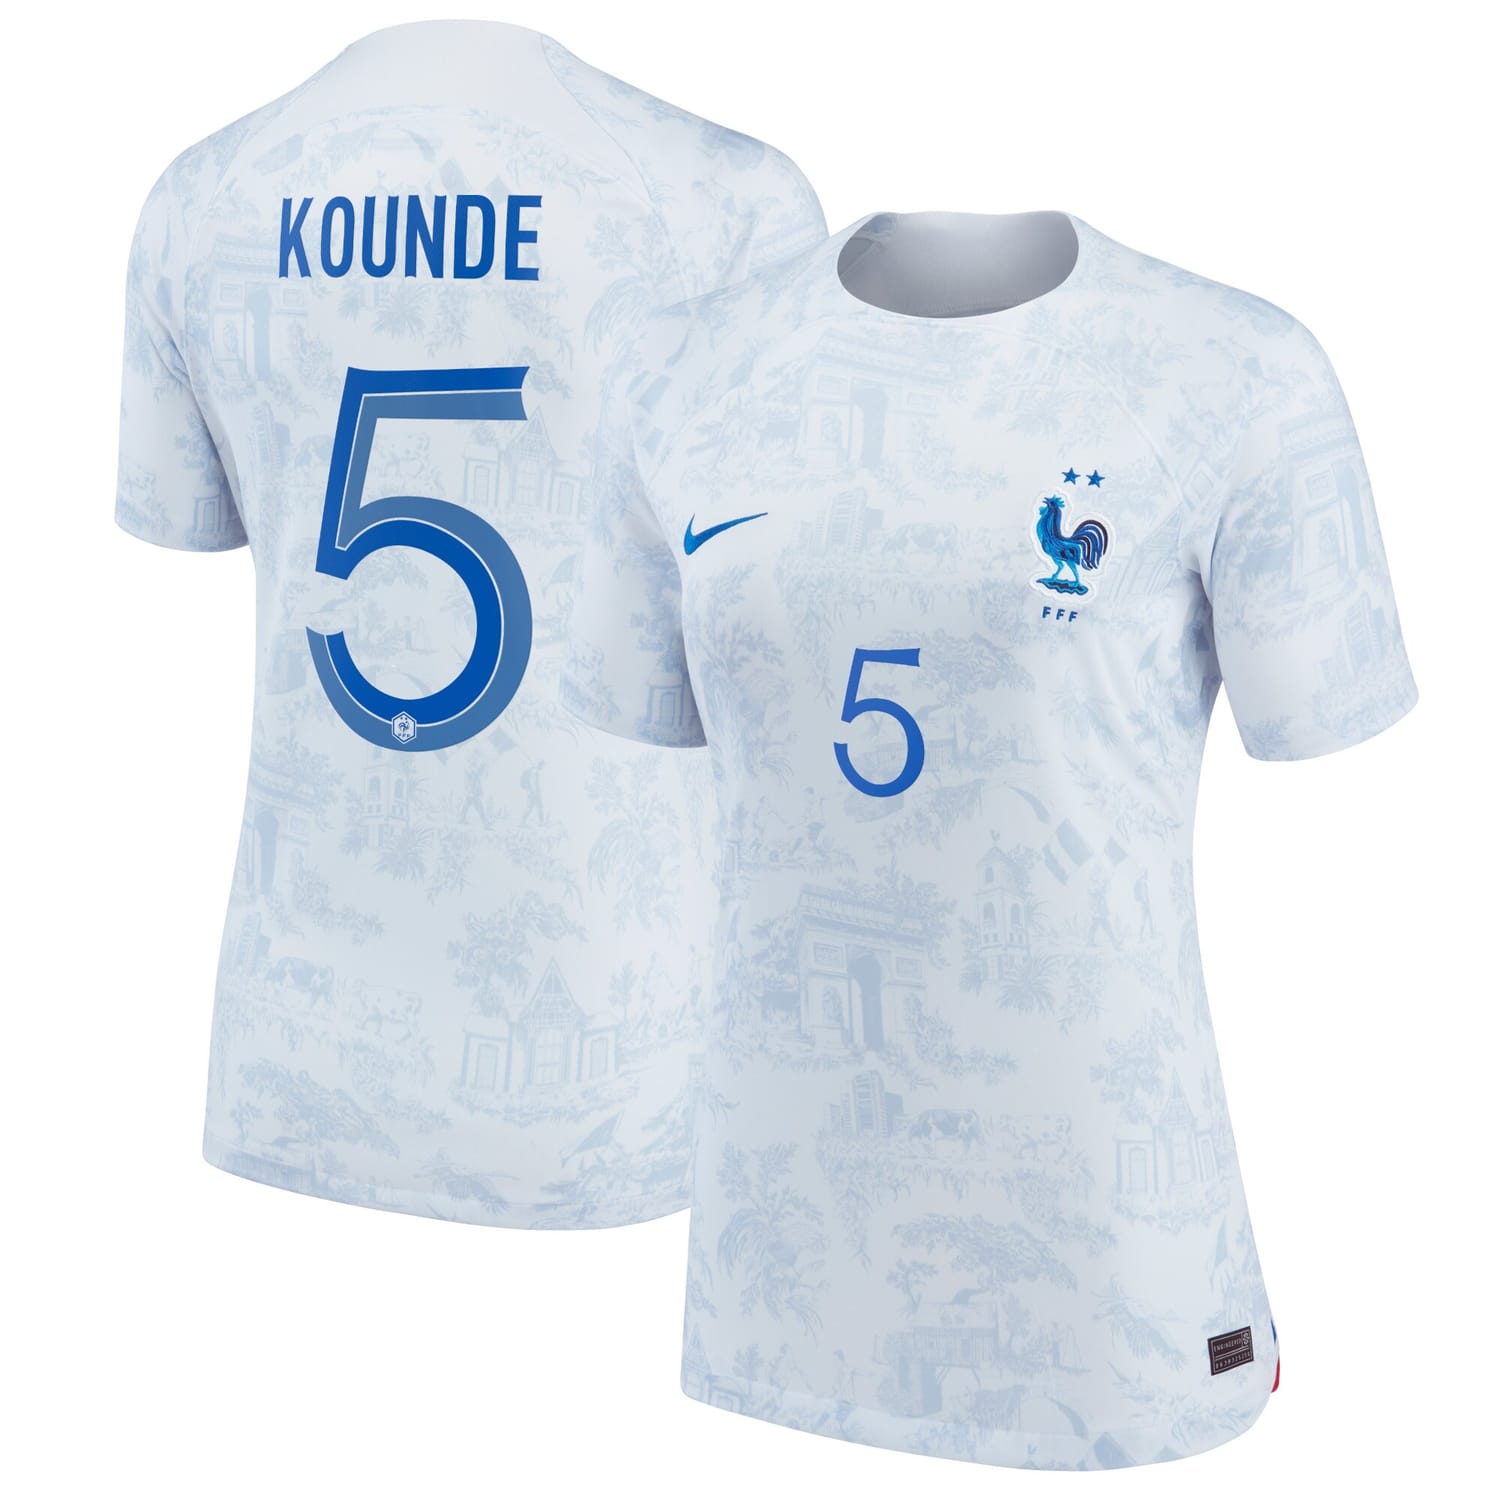 France National Team Away Jersey Shirt 2022 player Jules Koundé printing for Women